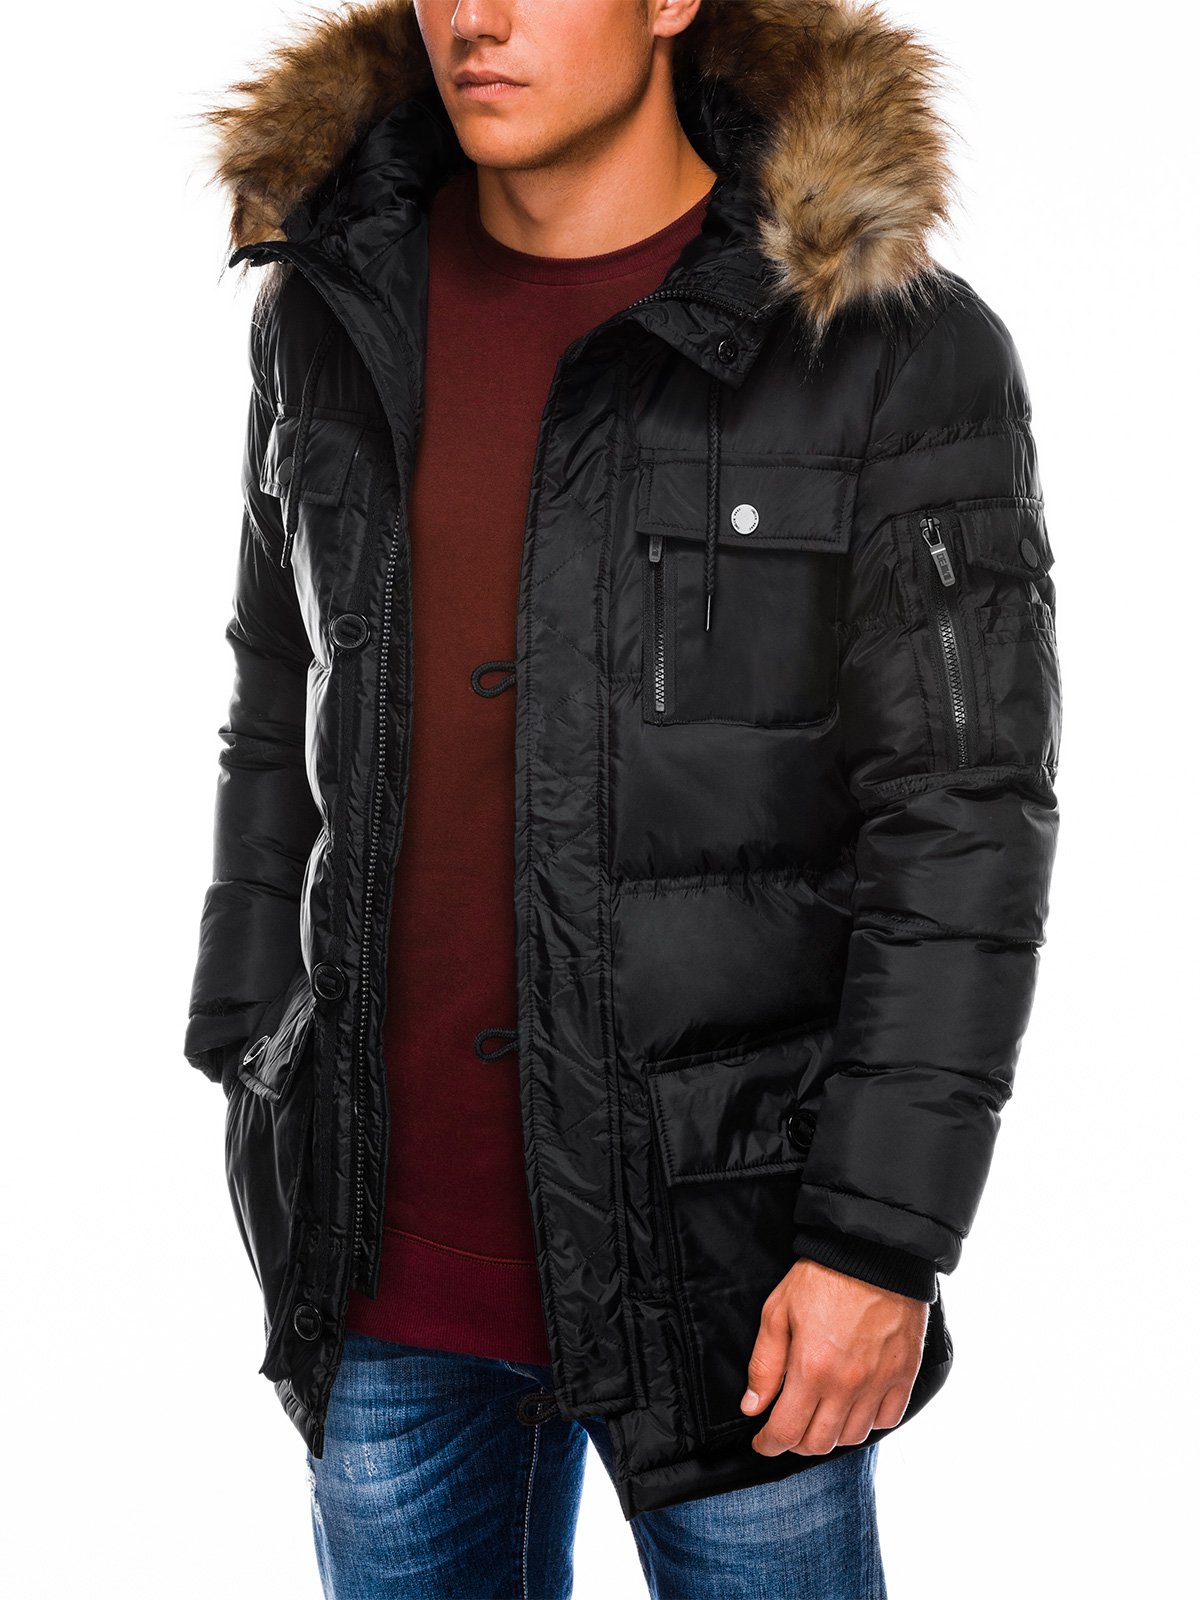  Men  s winter parka  jacket  C355 black MODONE wholesale 